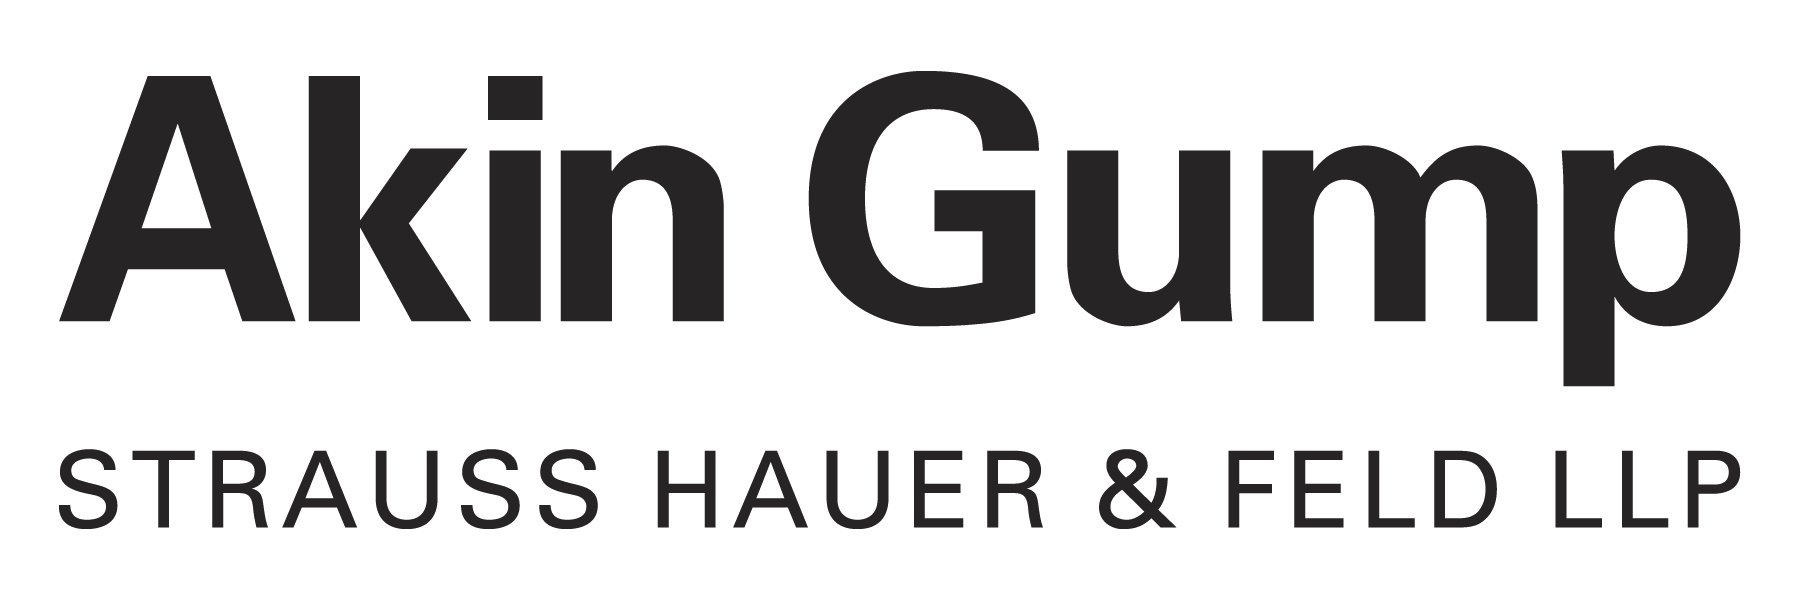 HOU19 Sponsor Akin Gump Logo - White (1).jpg